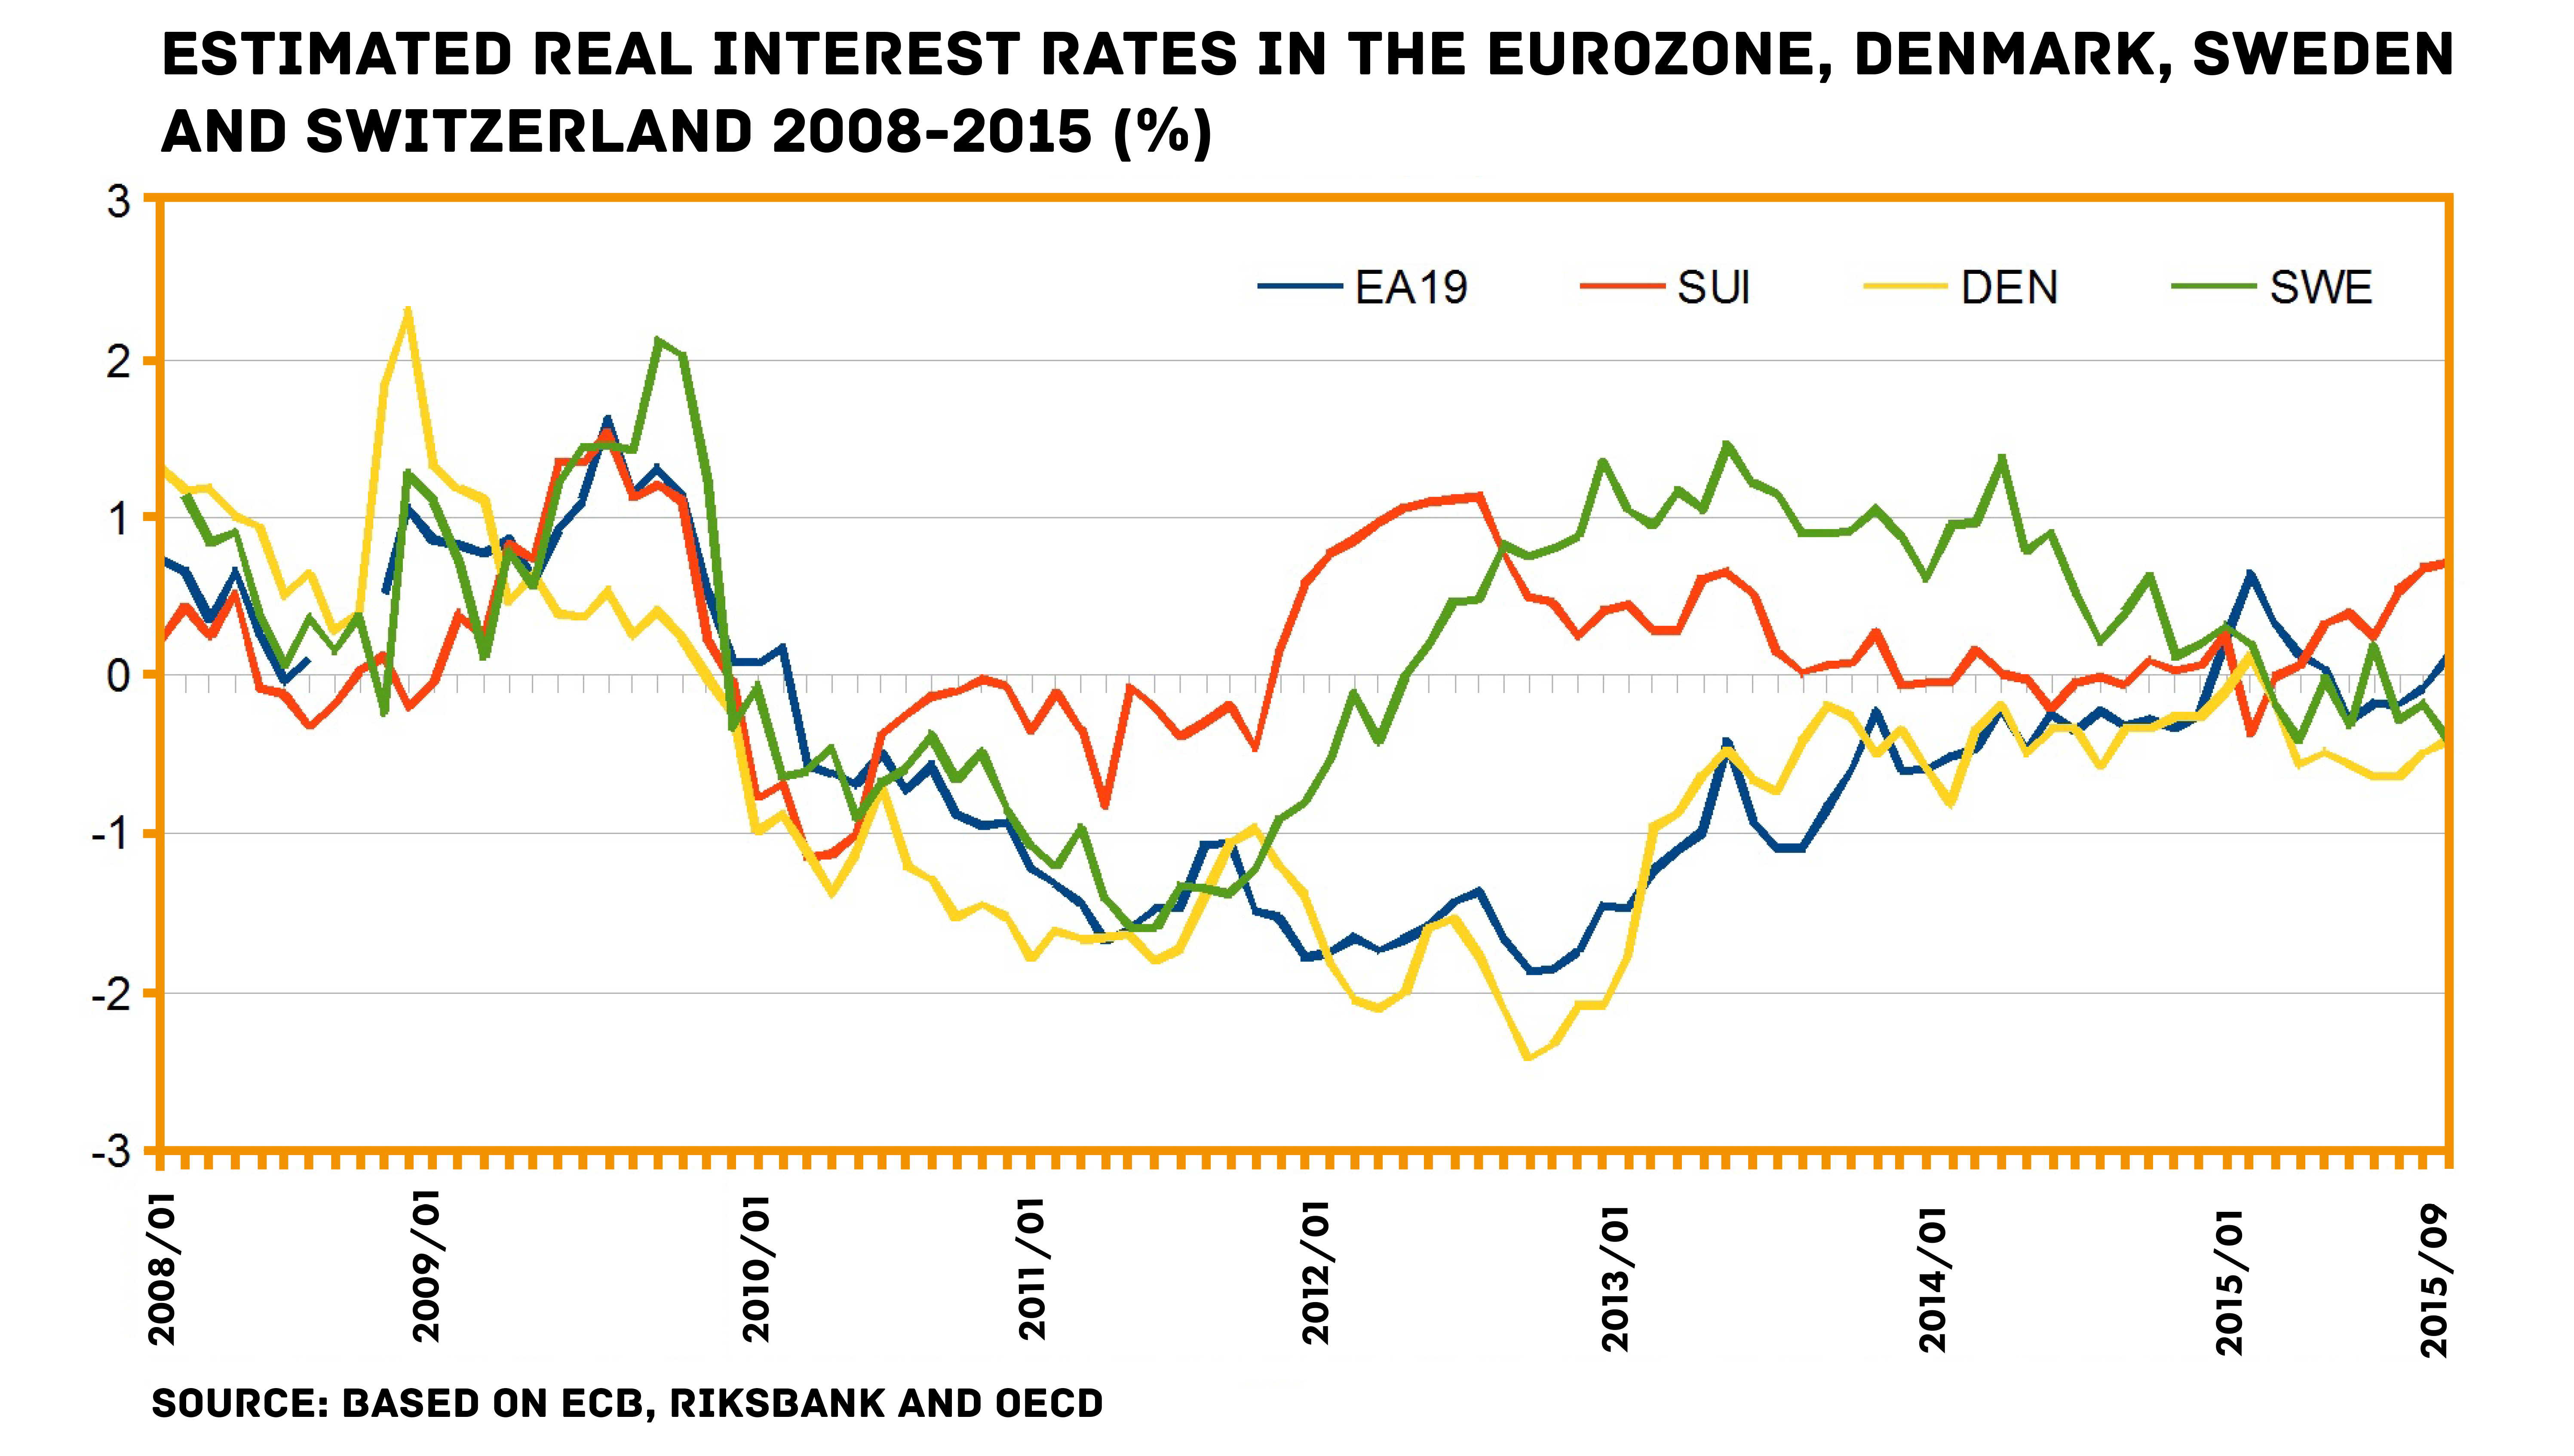 Negative interest rates: The ECB desperate